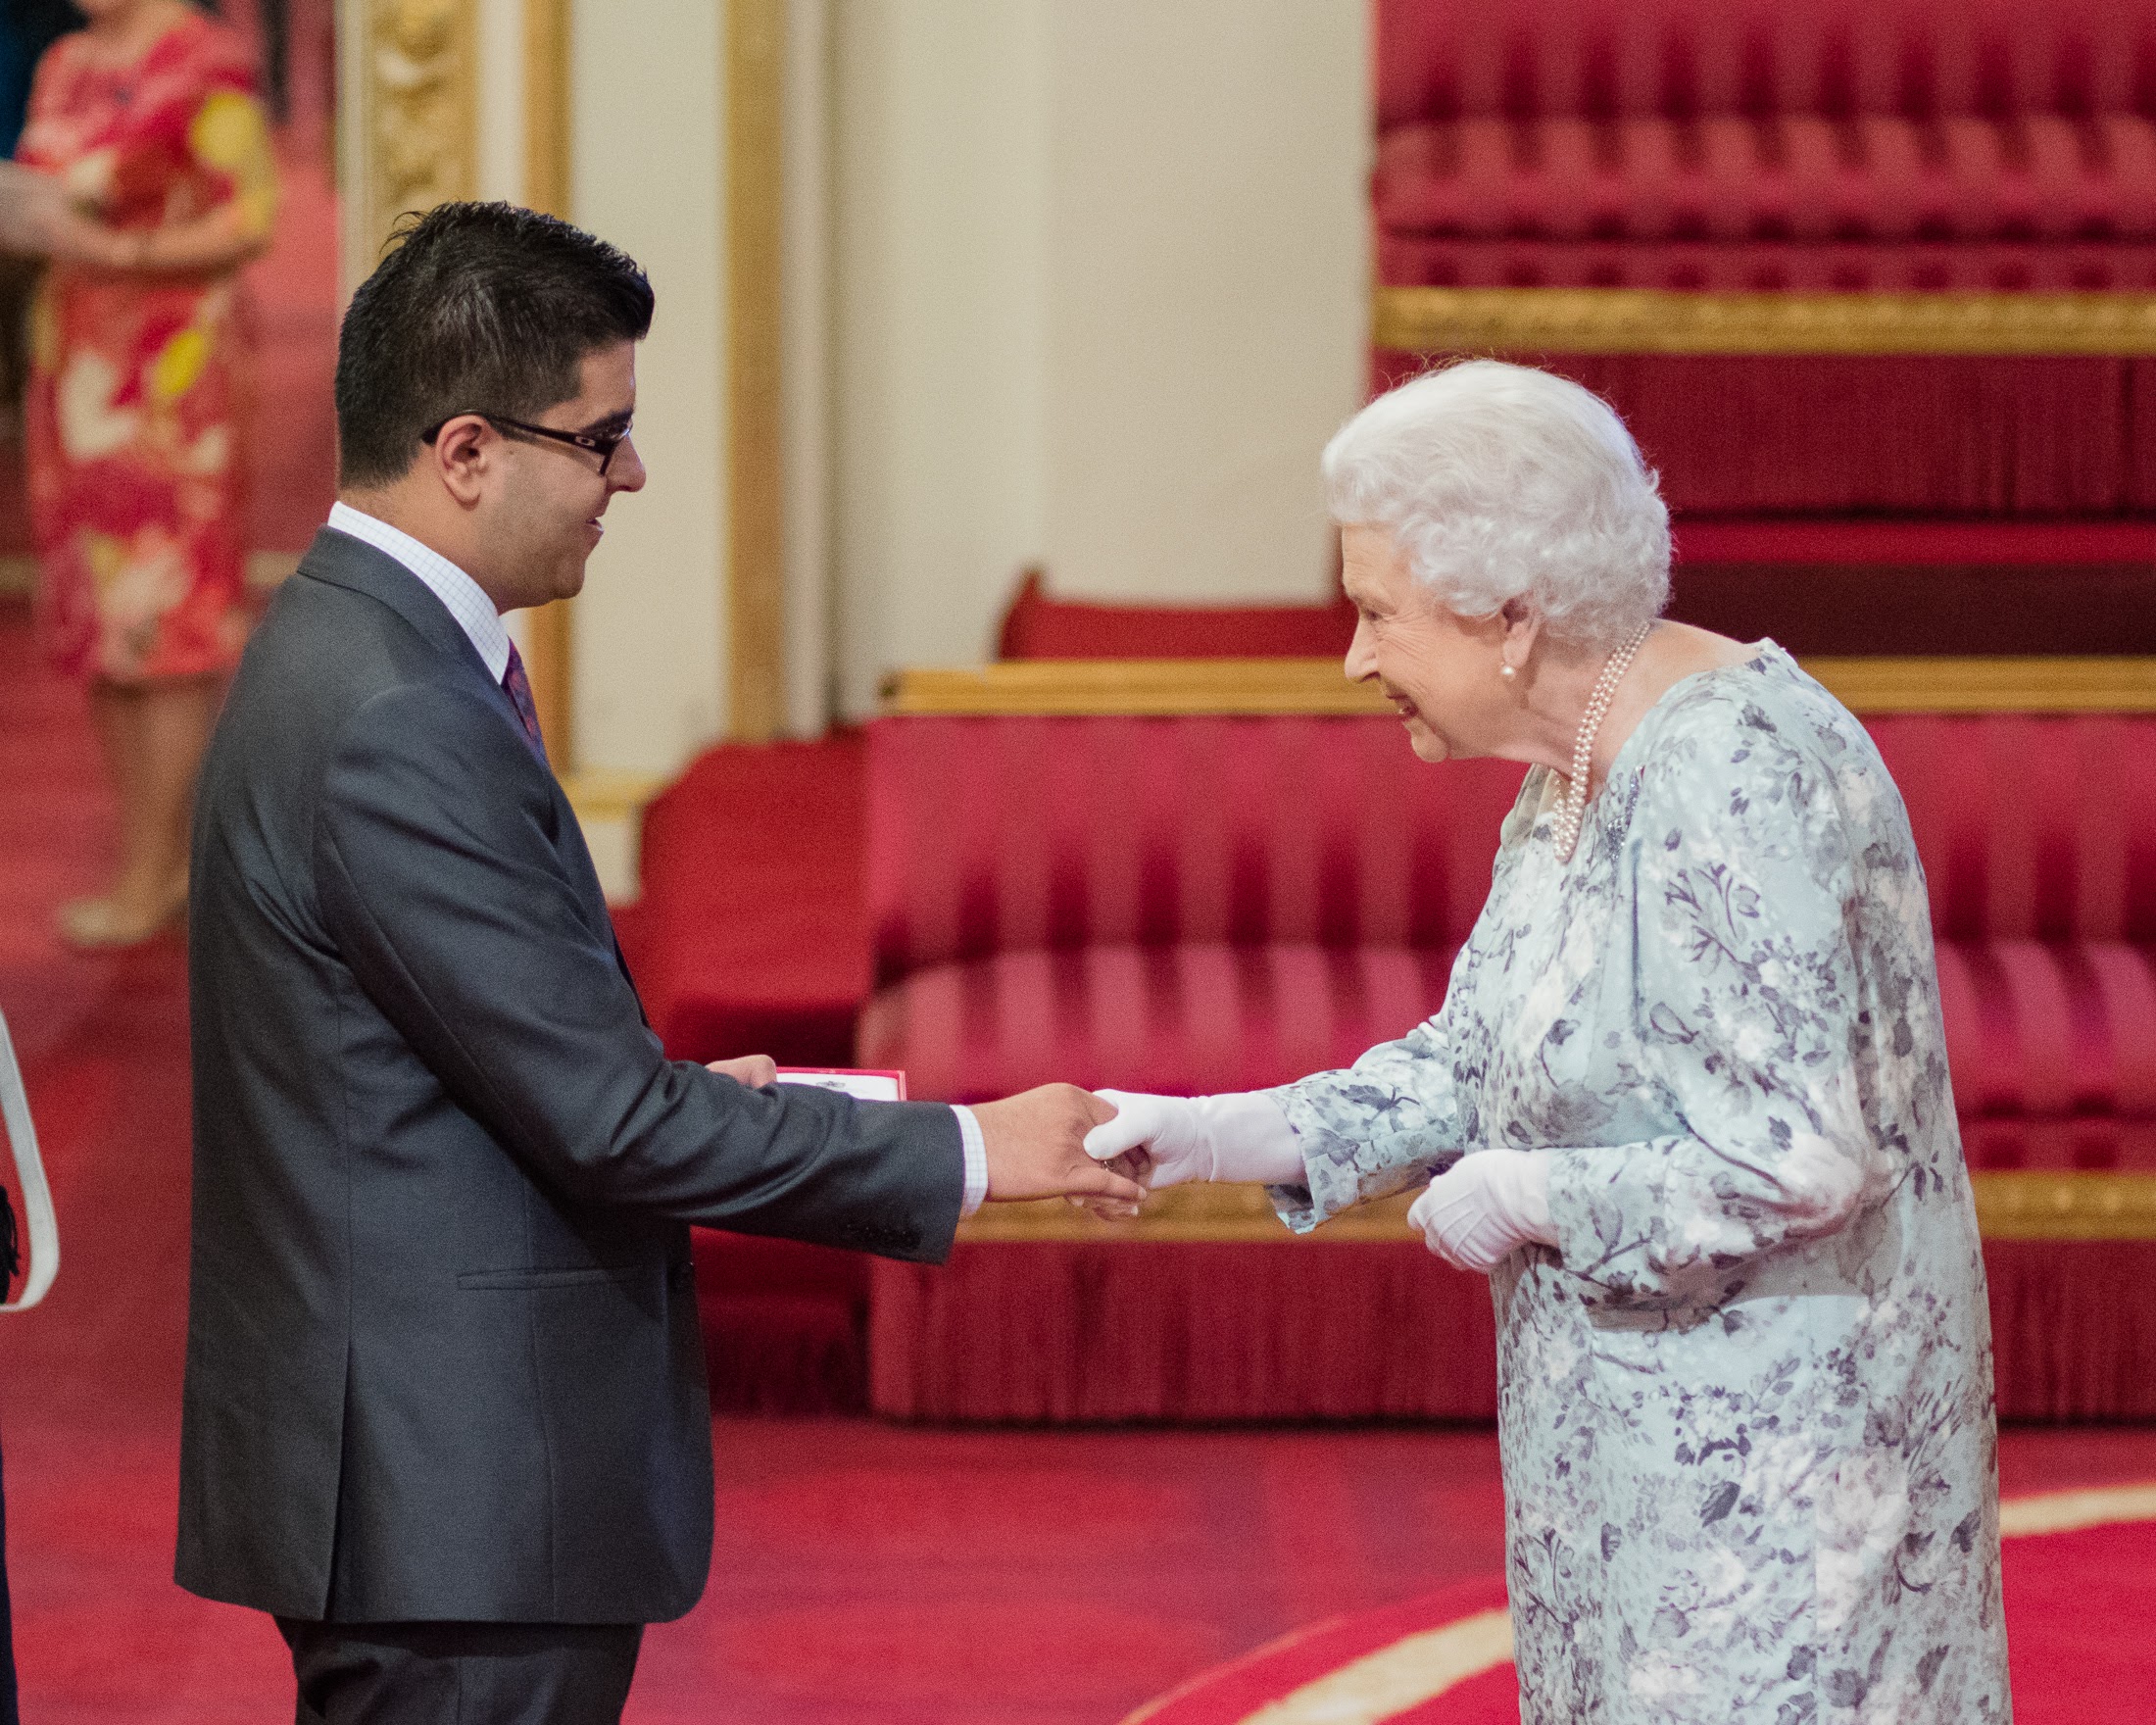 2017 Queens Young Leaders Award Winner Usman Ali - United Kingdom